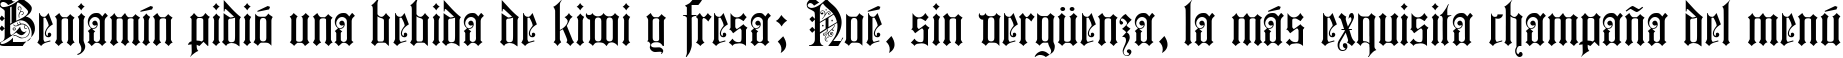 Пример написания шрифтом Colchester Black текста на испанском